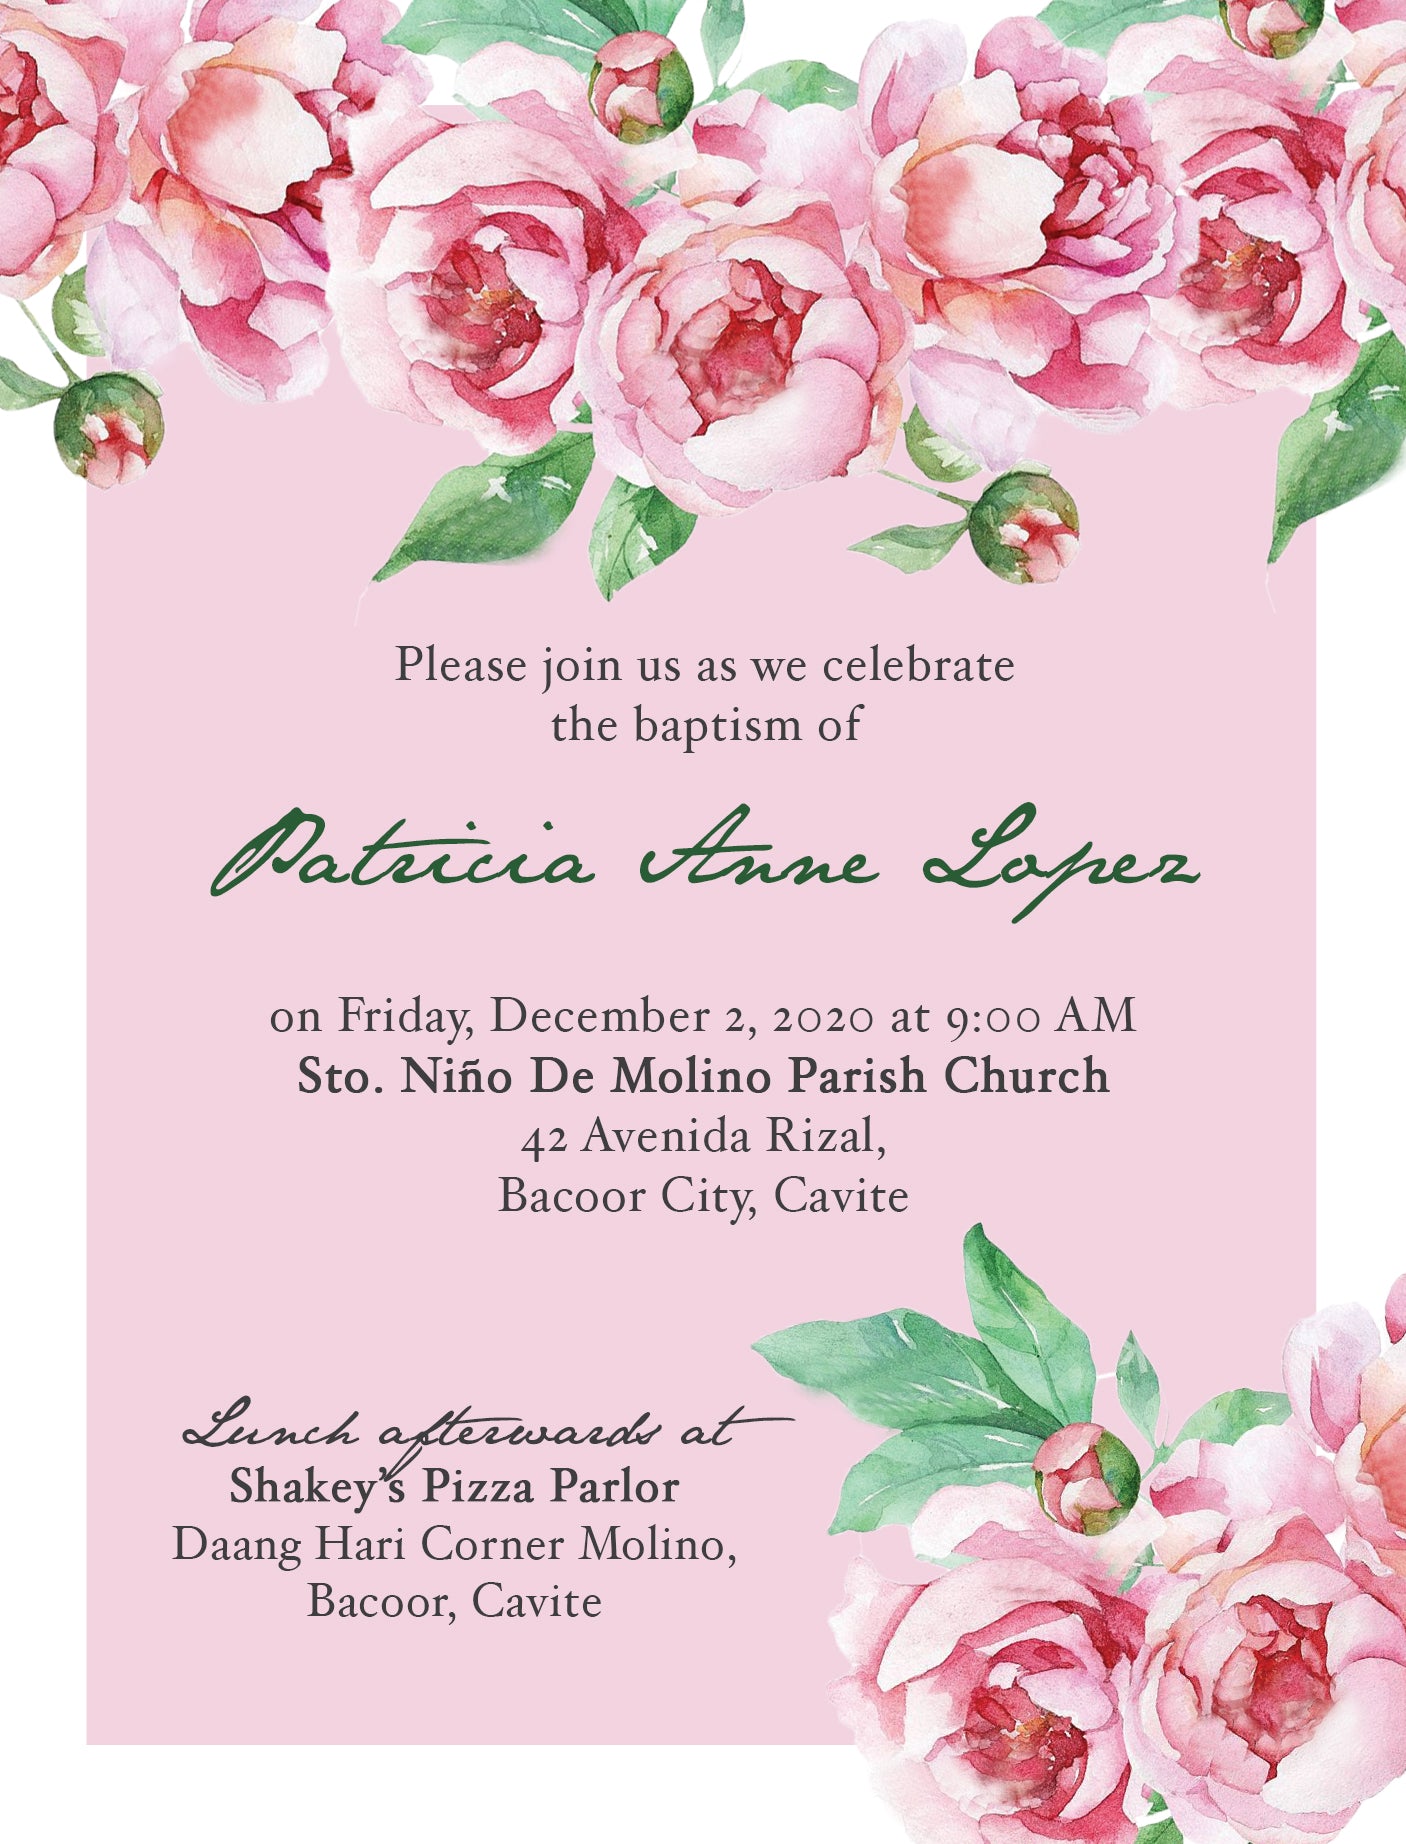 Patricia Christening Invitation